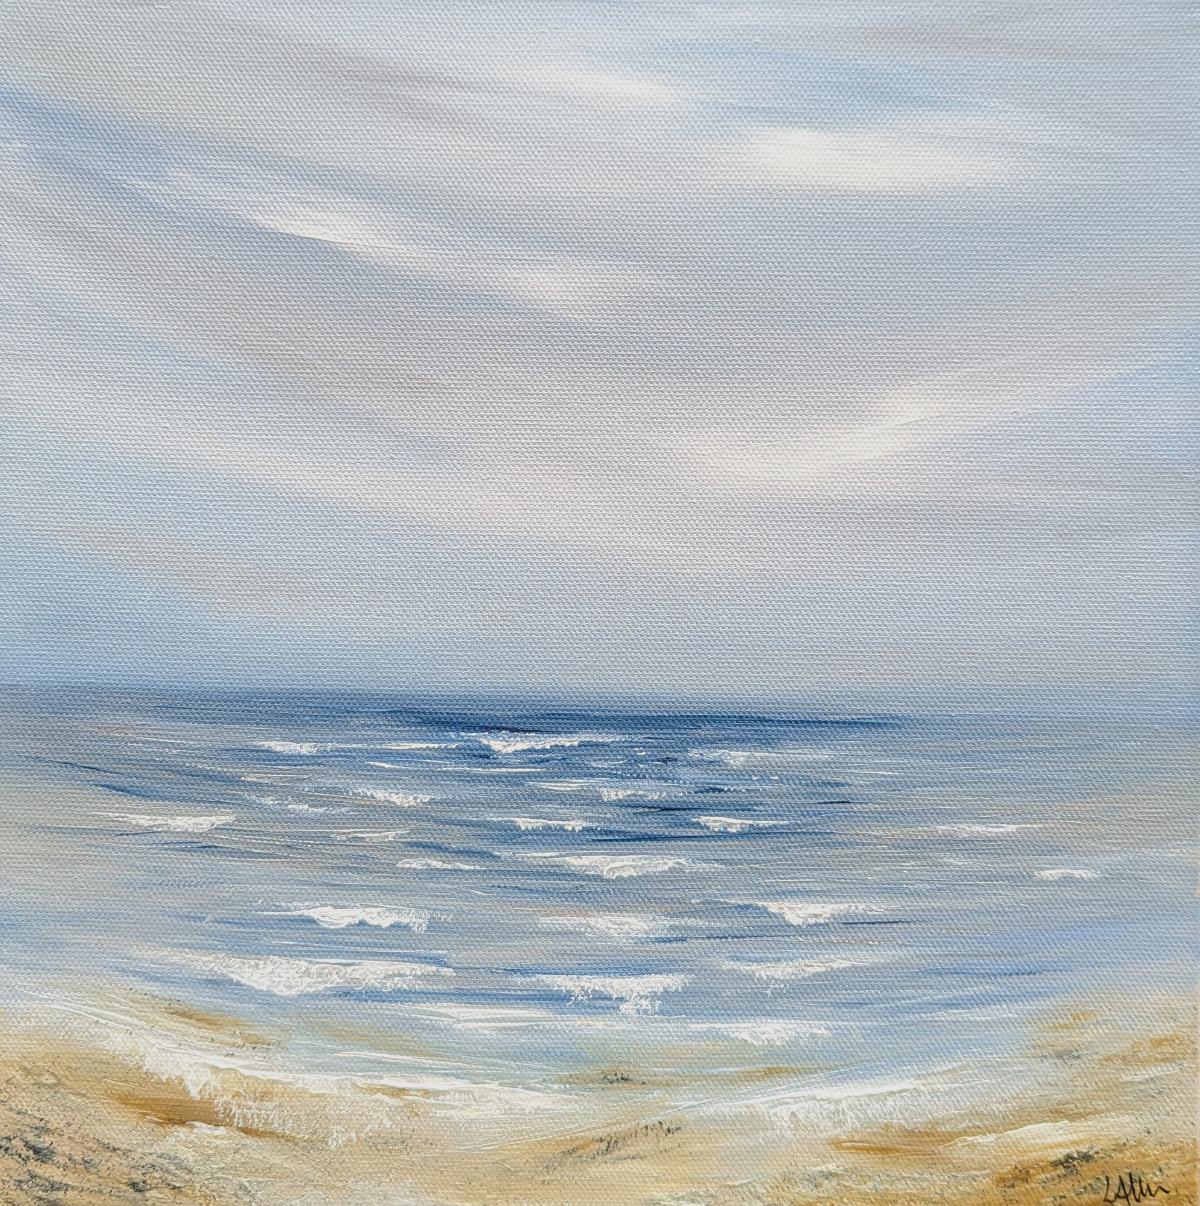 The Calm Before The Storm #3, Original painting, Seascape, landscape, Beach